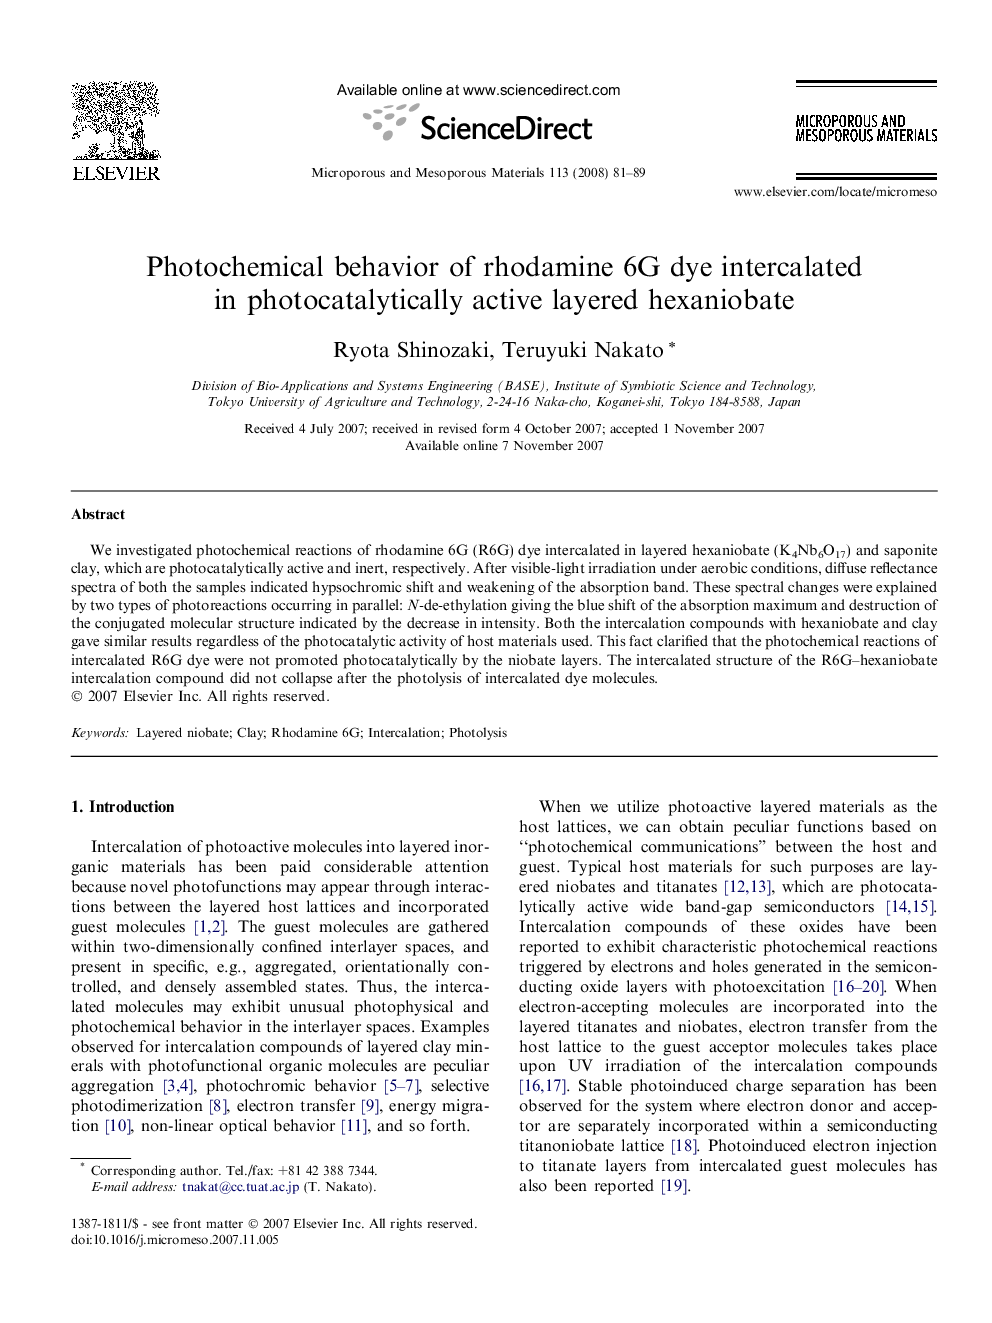 Photochemical behavior of rhodamine 6G dye intercalated in photocatalytically active layered hexaniobate